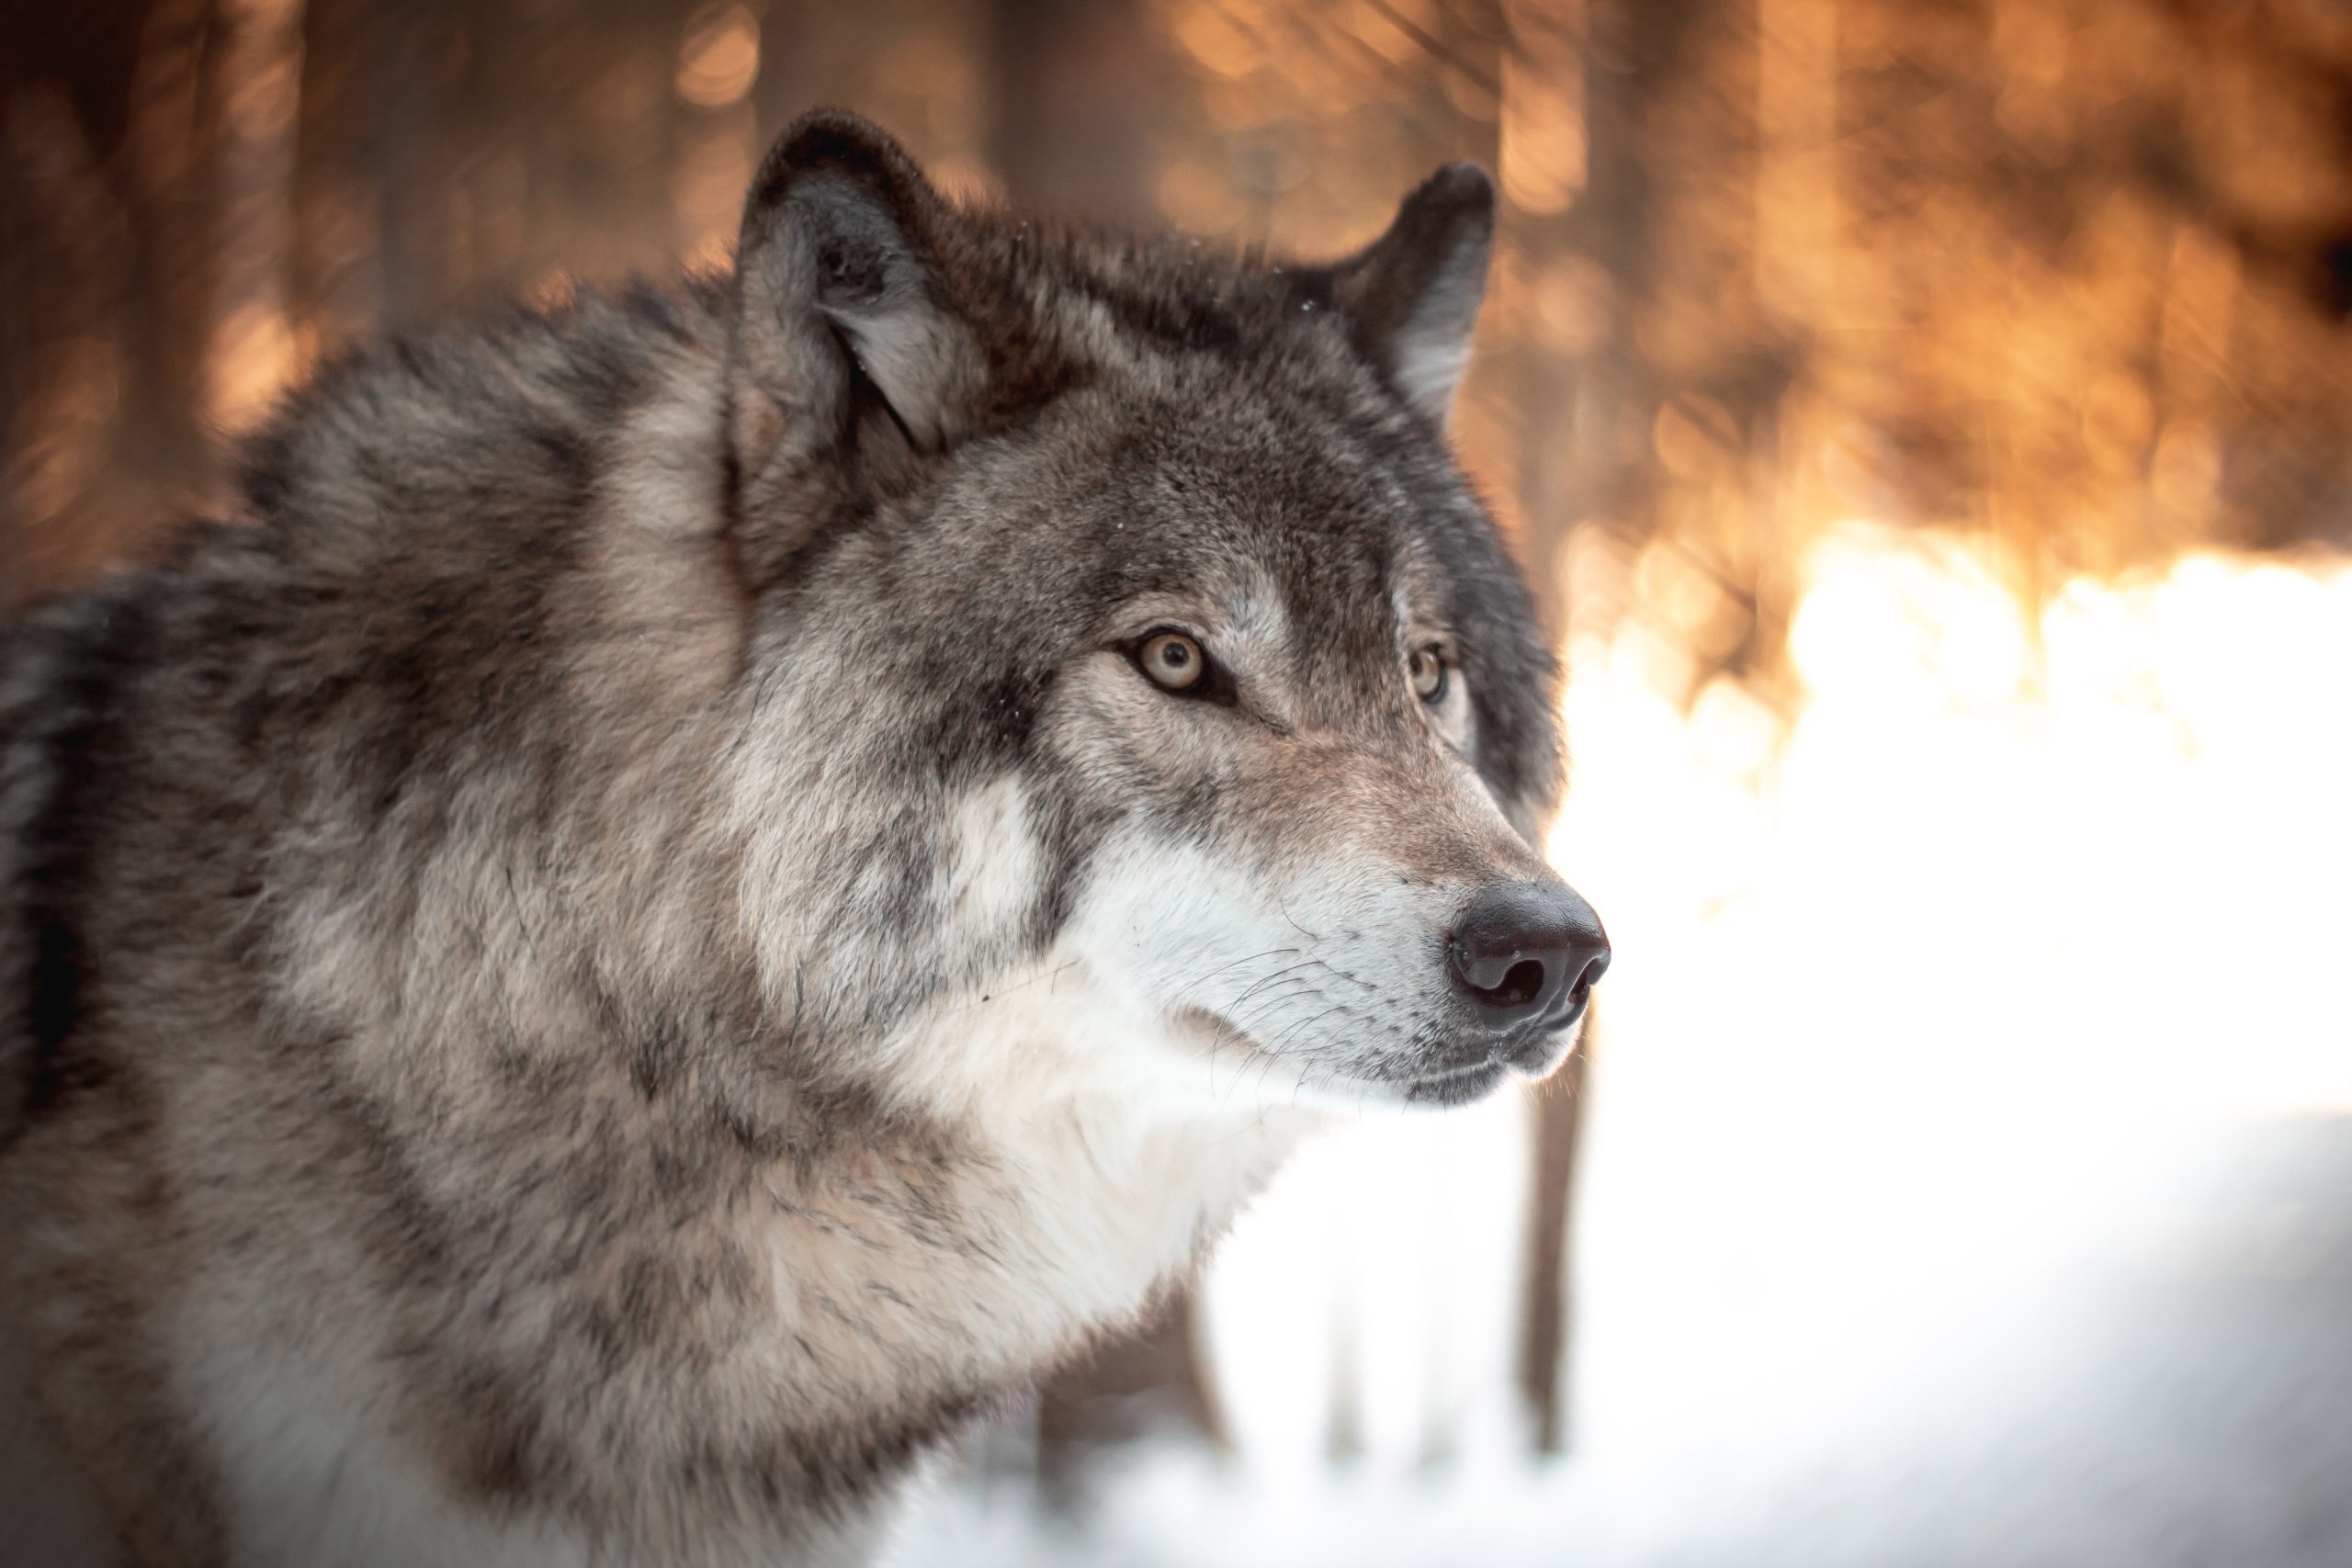  Memimpikan Serigala: Mimpi tentang serigala mungkin MENGUNGKAP sesuatu yang Menakutkan tentang Anda